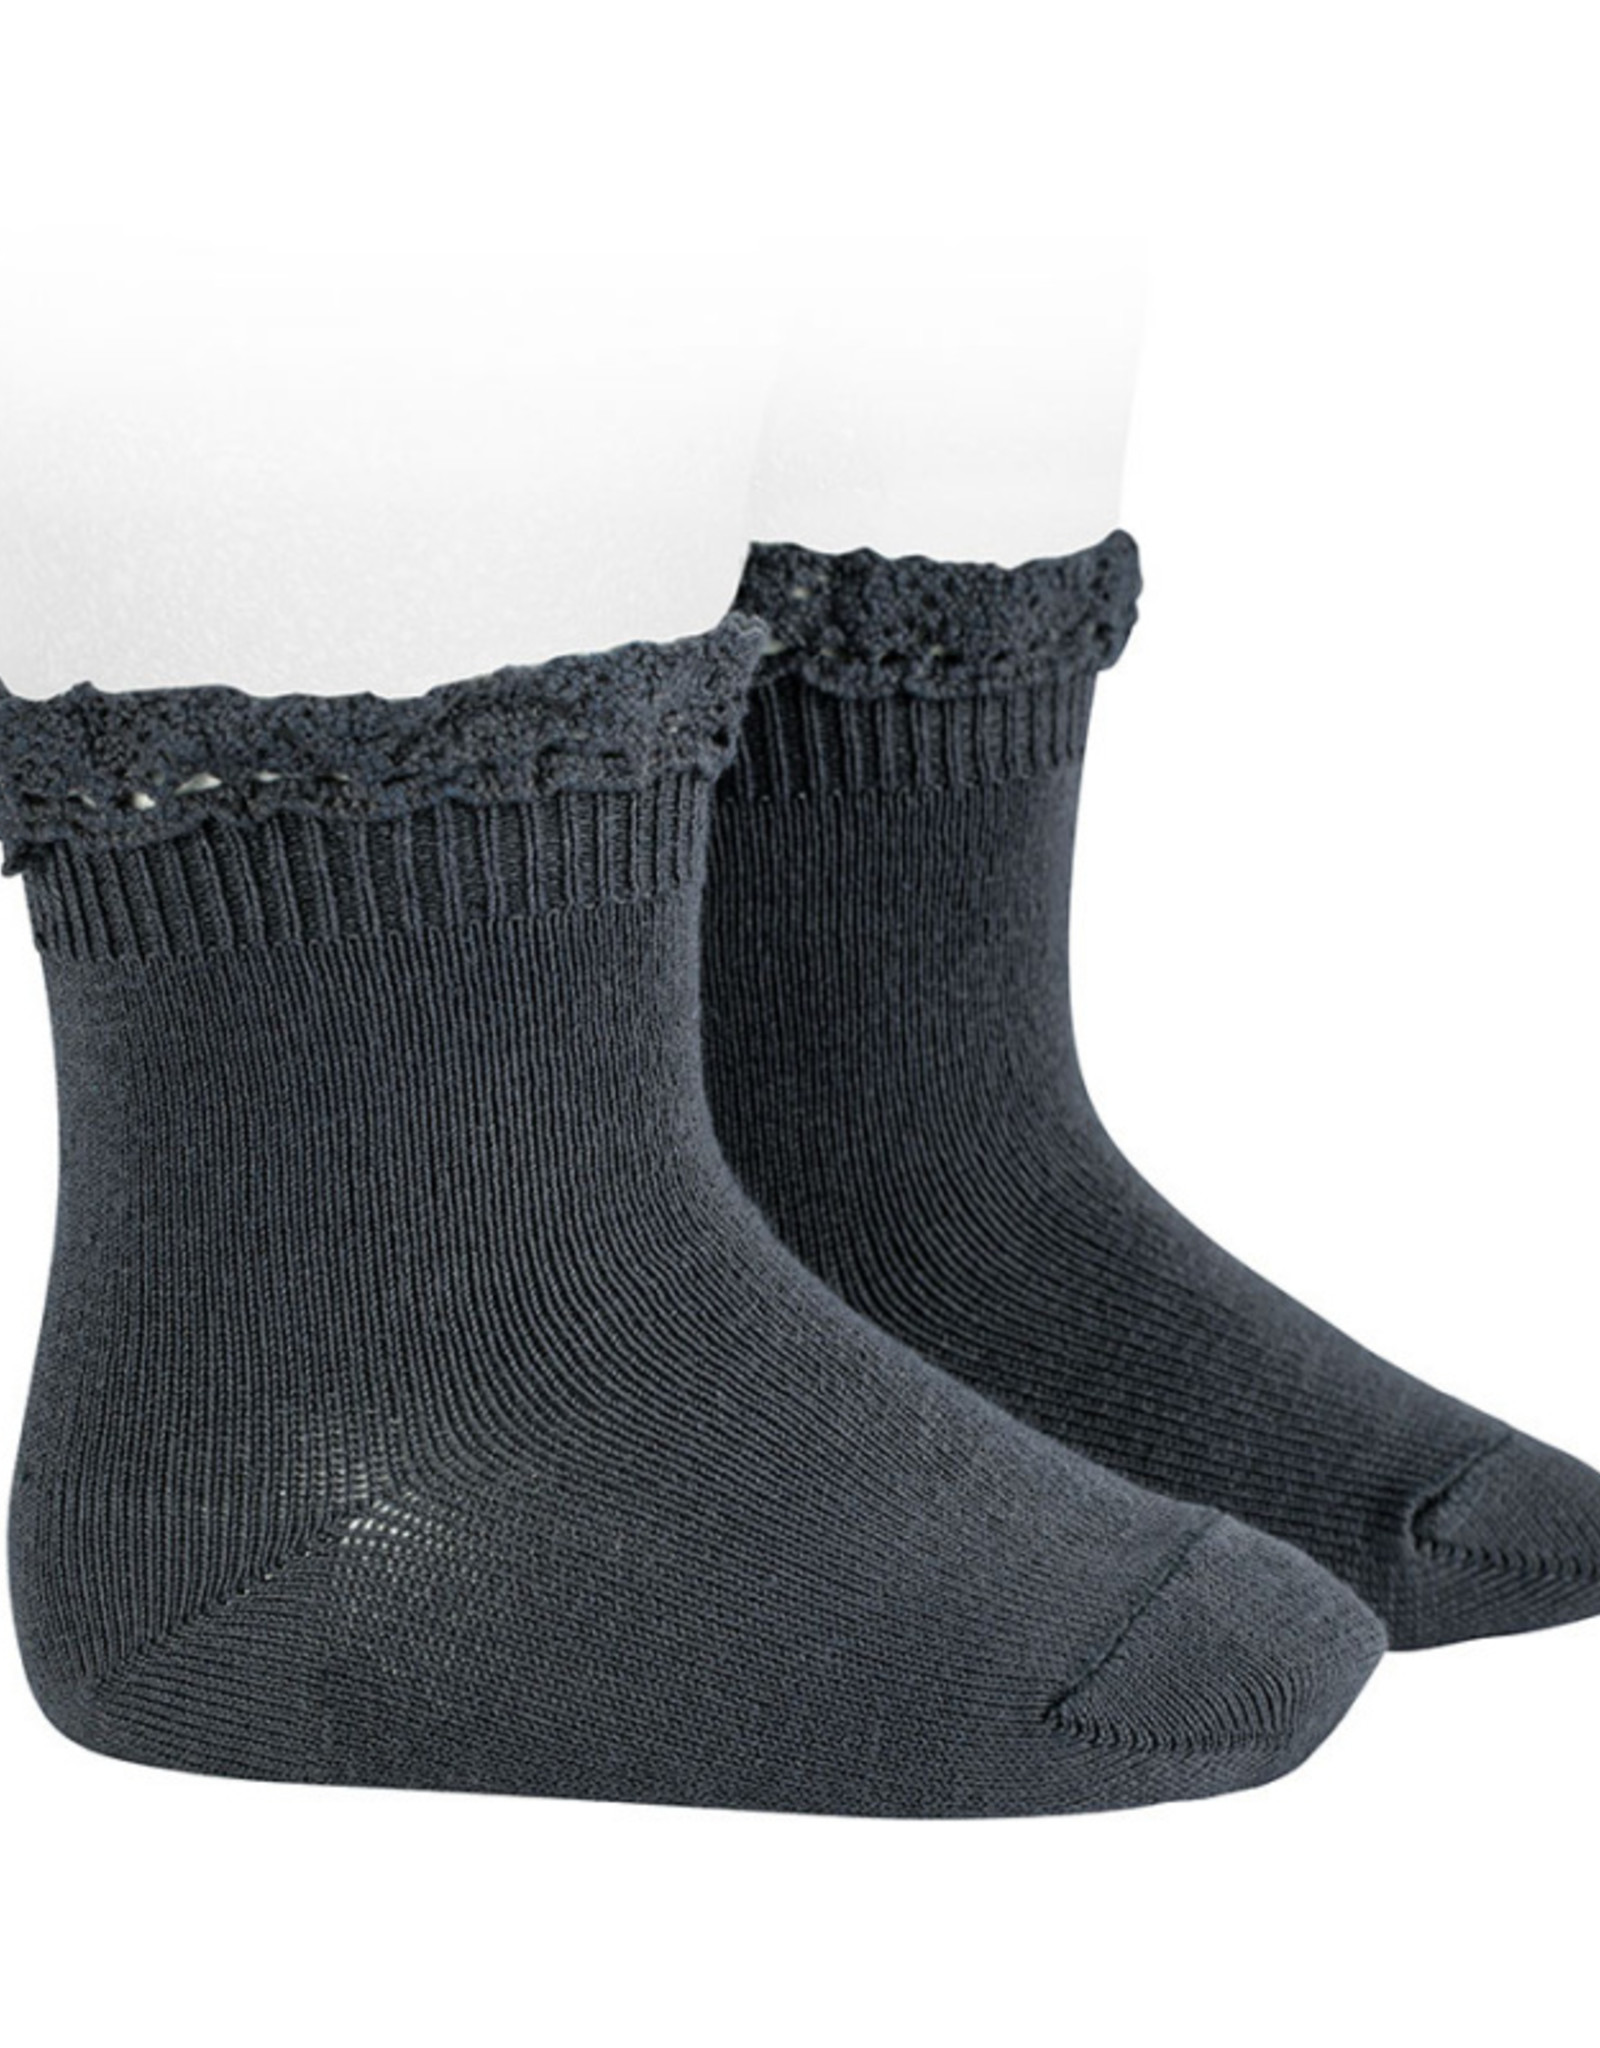 Condor Condor Midcalf Sock with Lace Trim